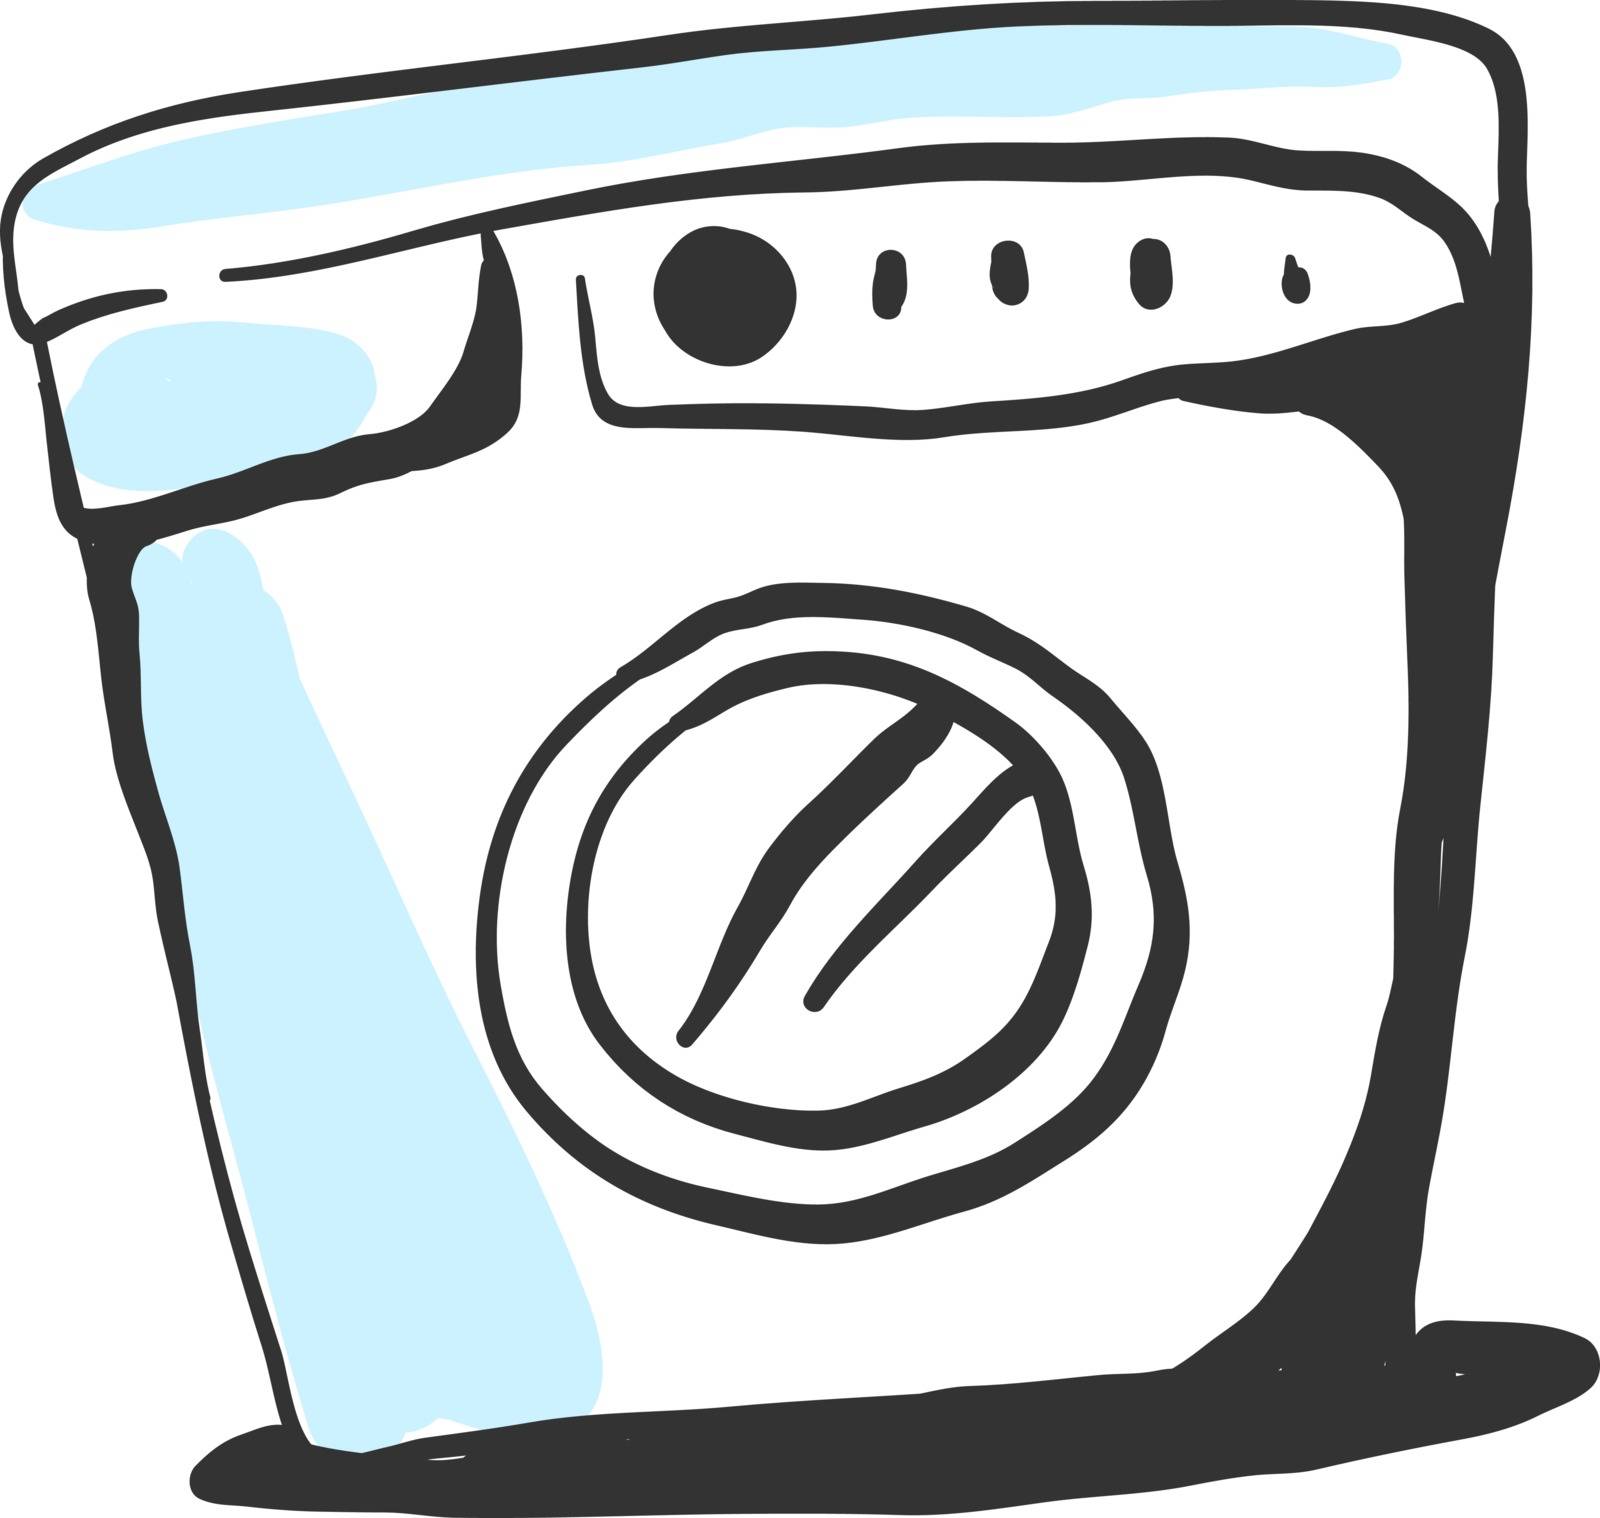 White washer, illustration, vector on white background.